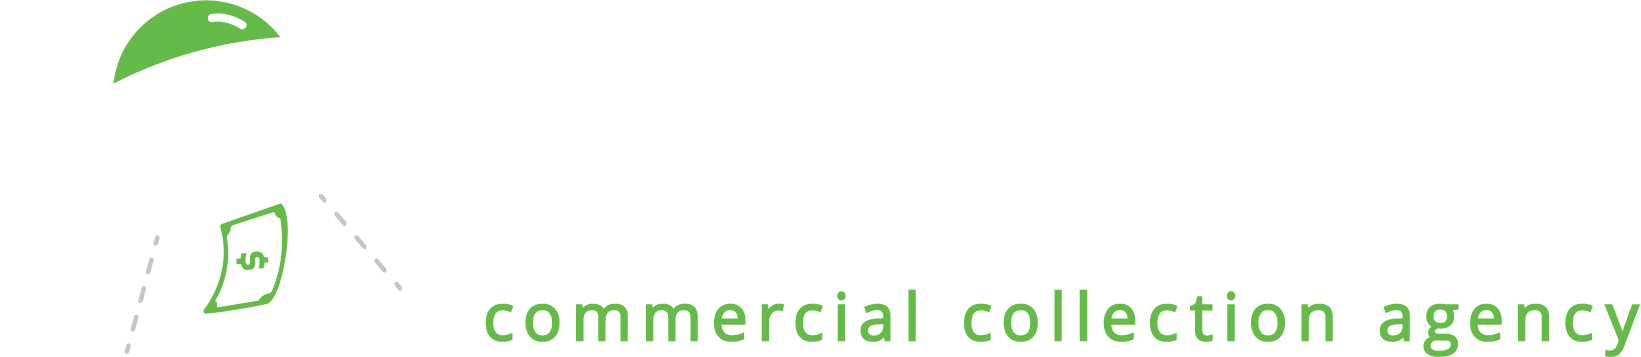 enterprise-recovery_logo_header-2.png